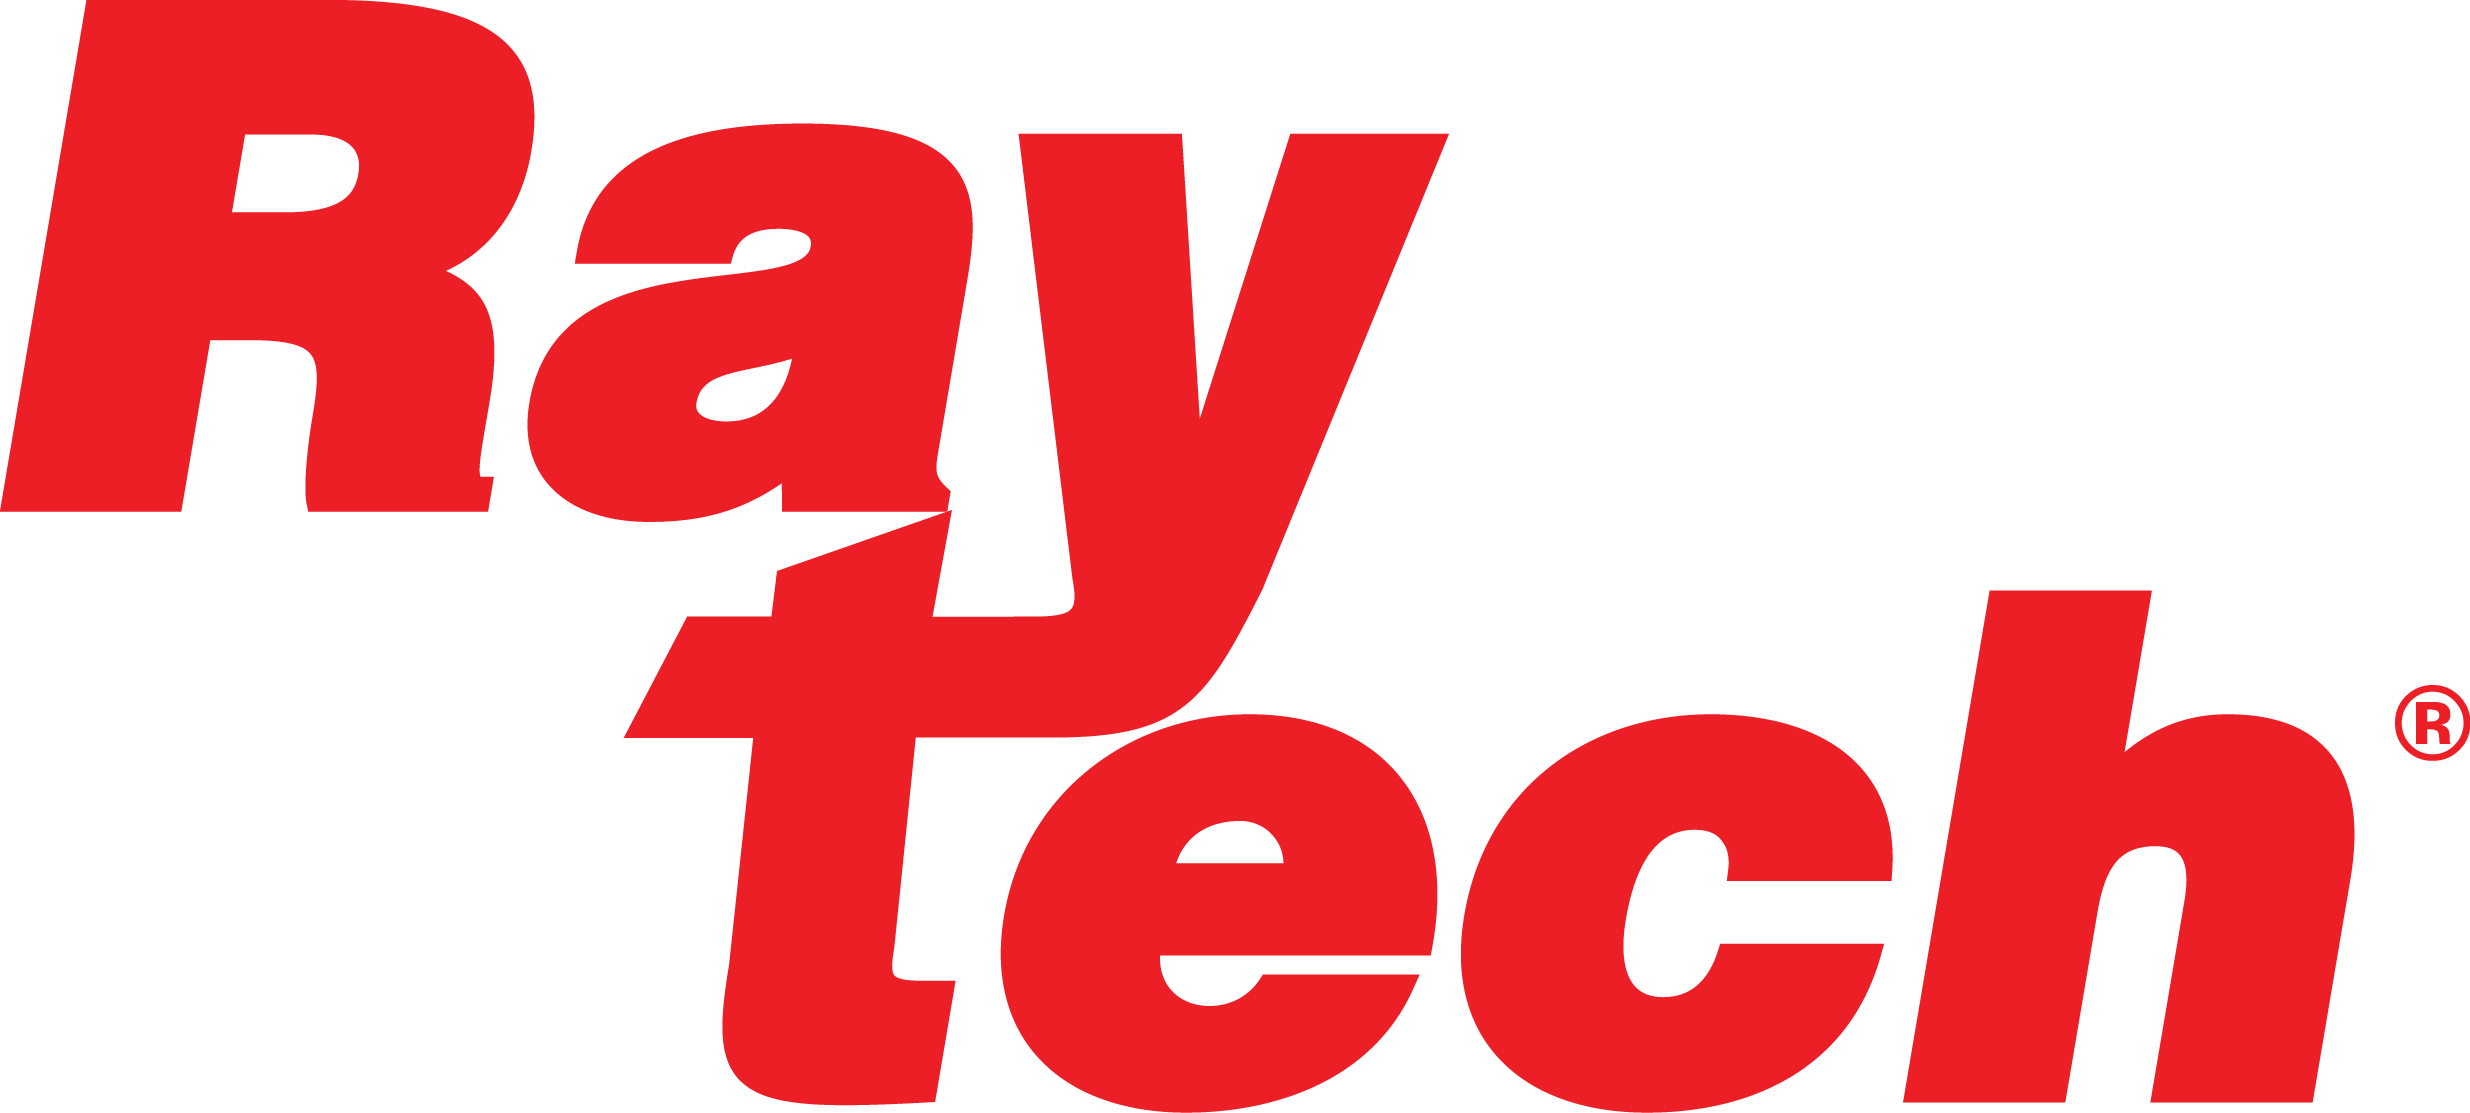 Raytech logo20230109 2556 1065hf8